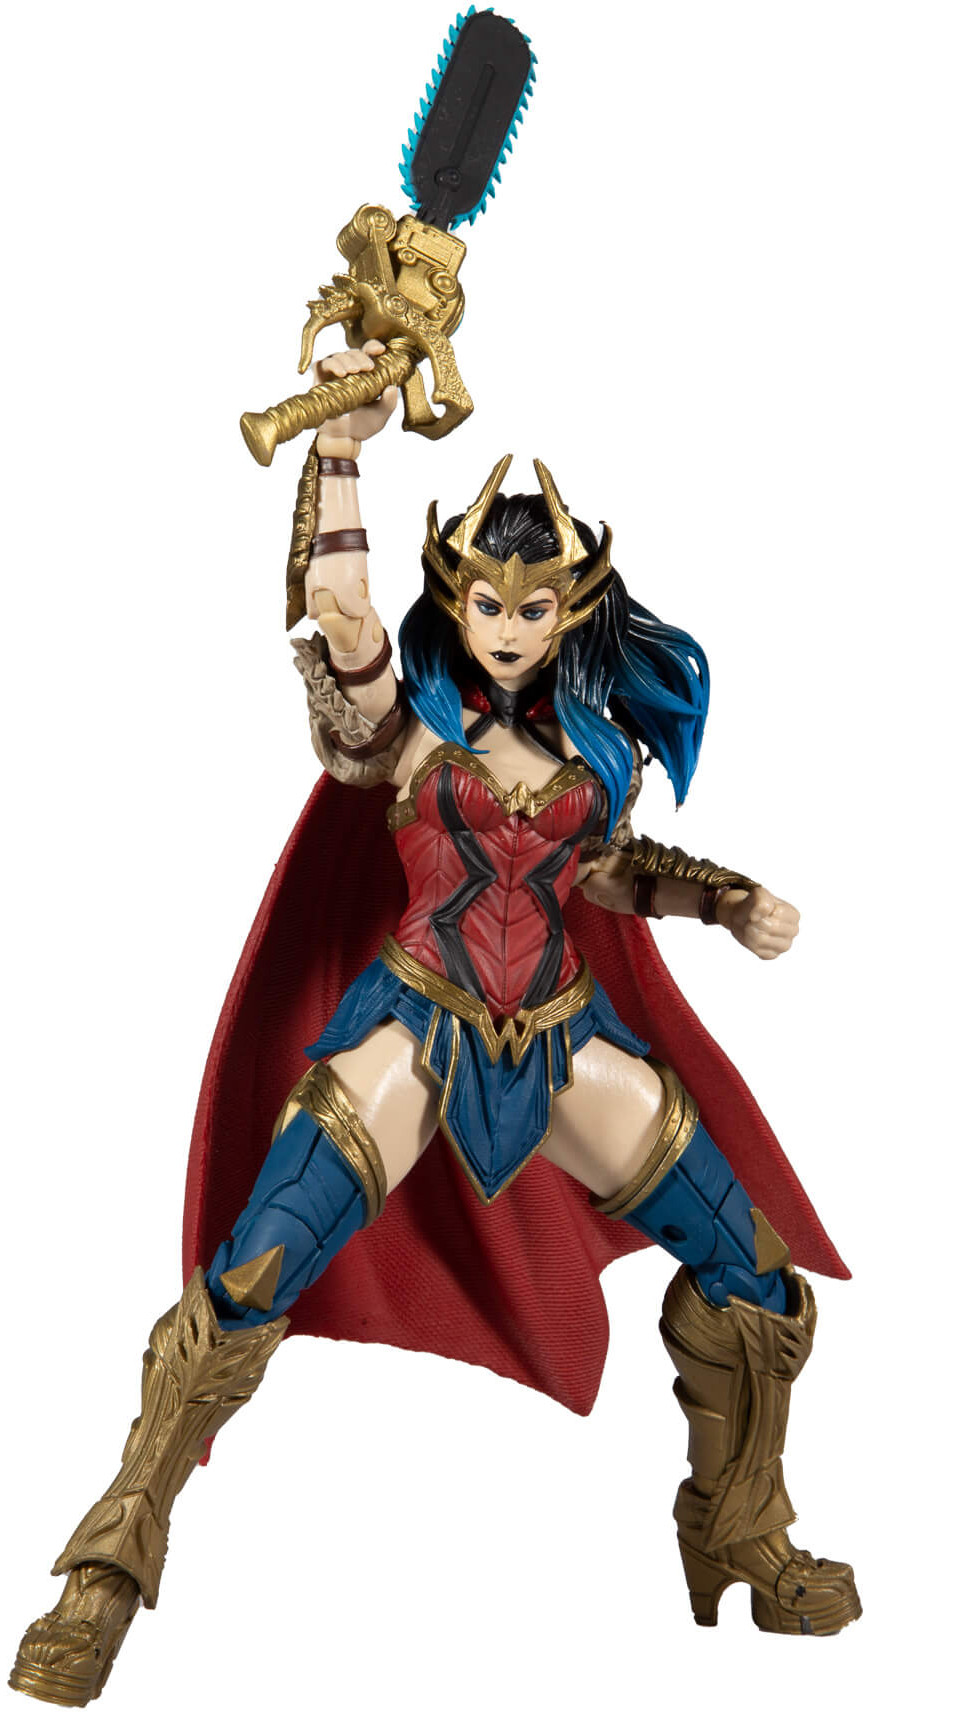 DC Multiverse - Wonder Woman